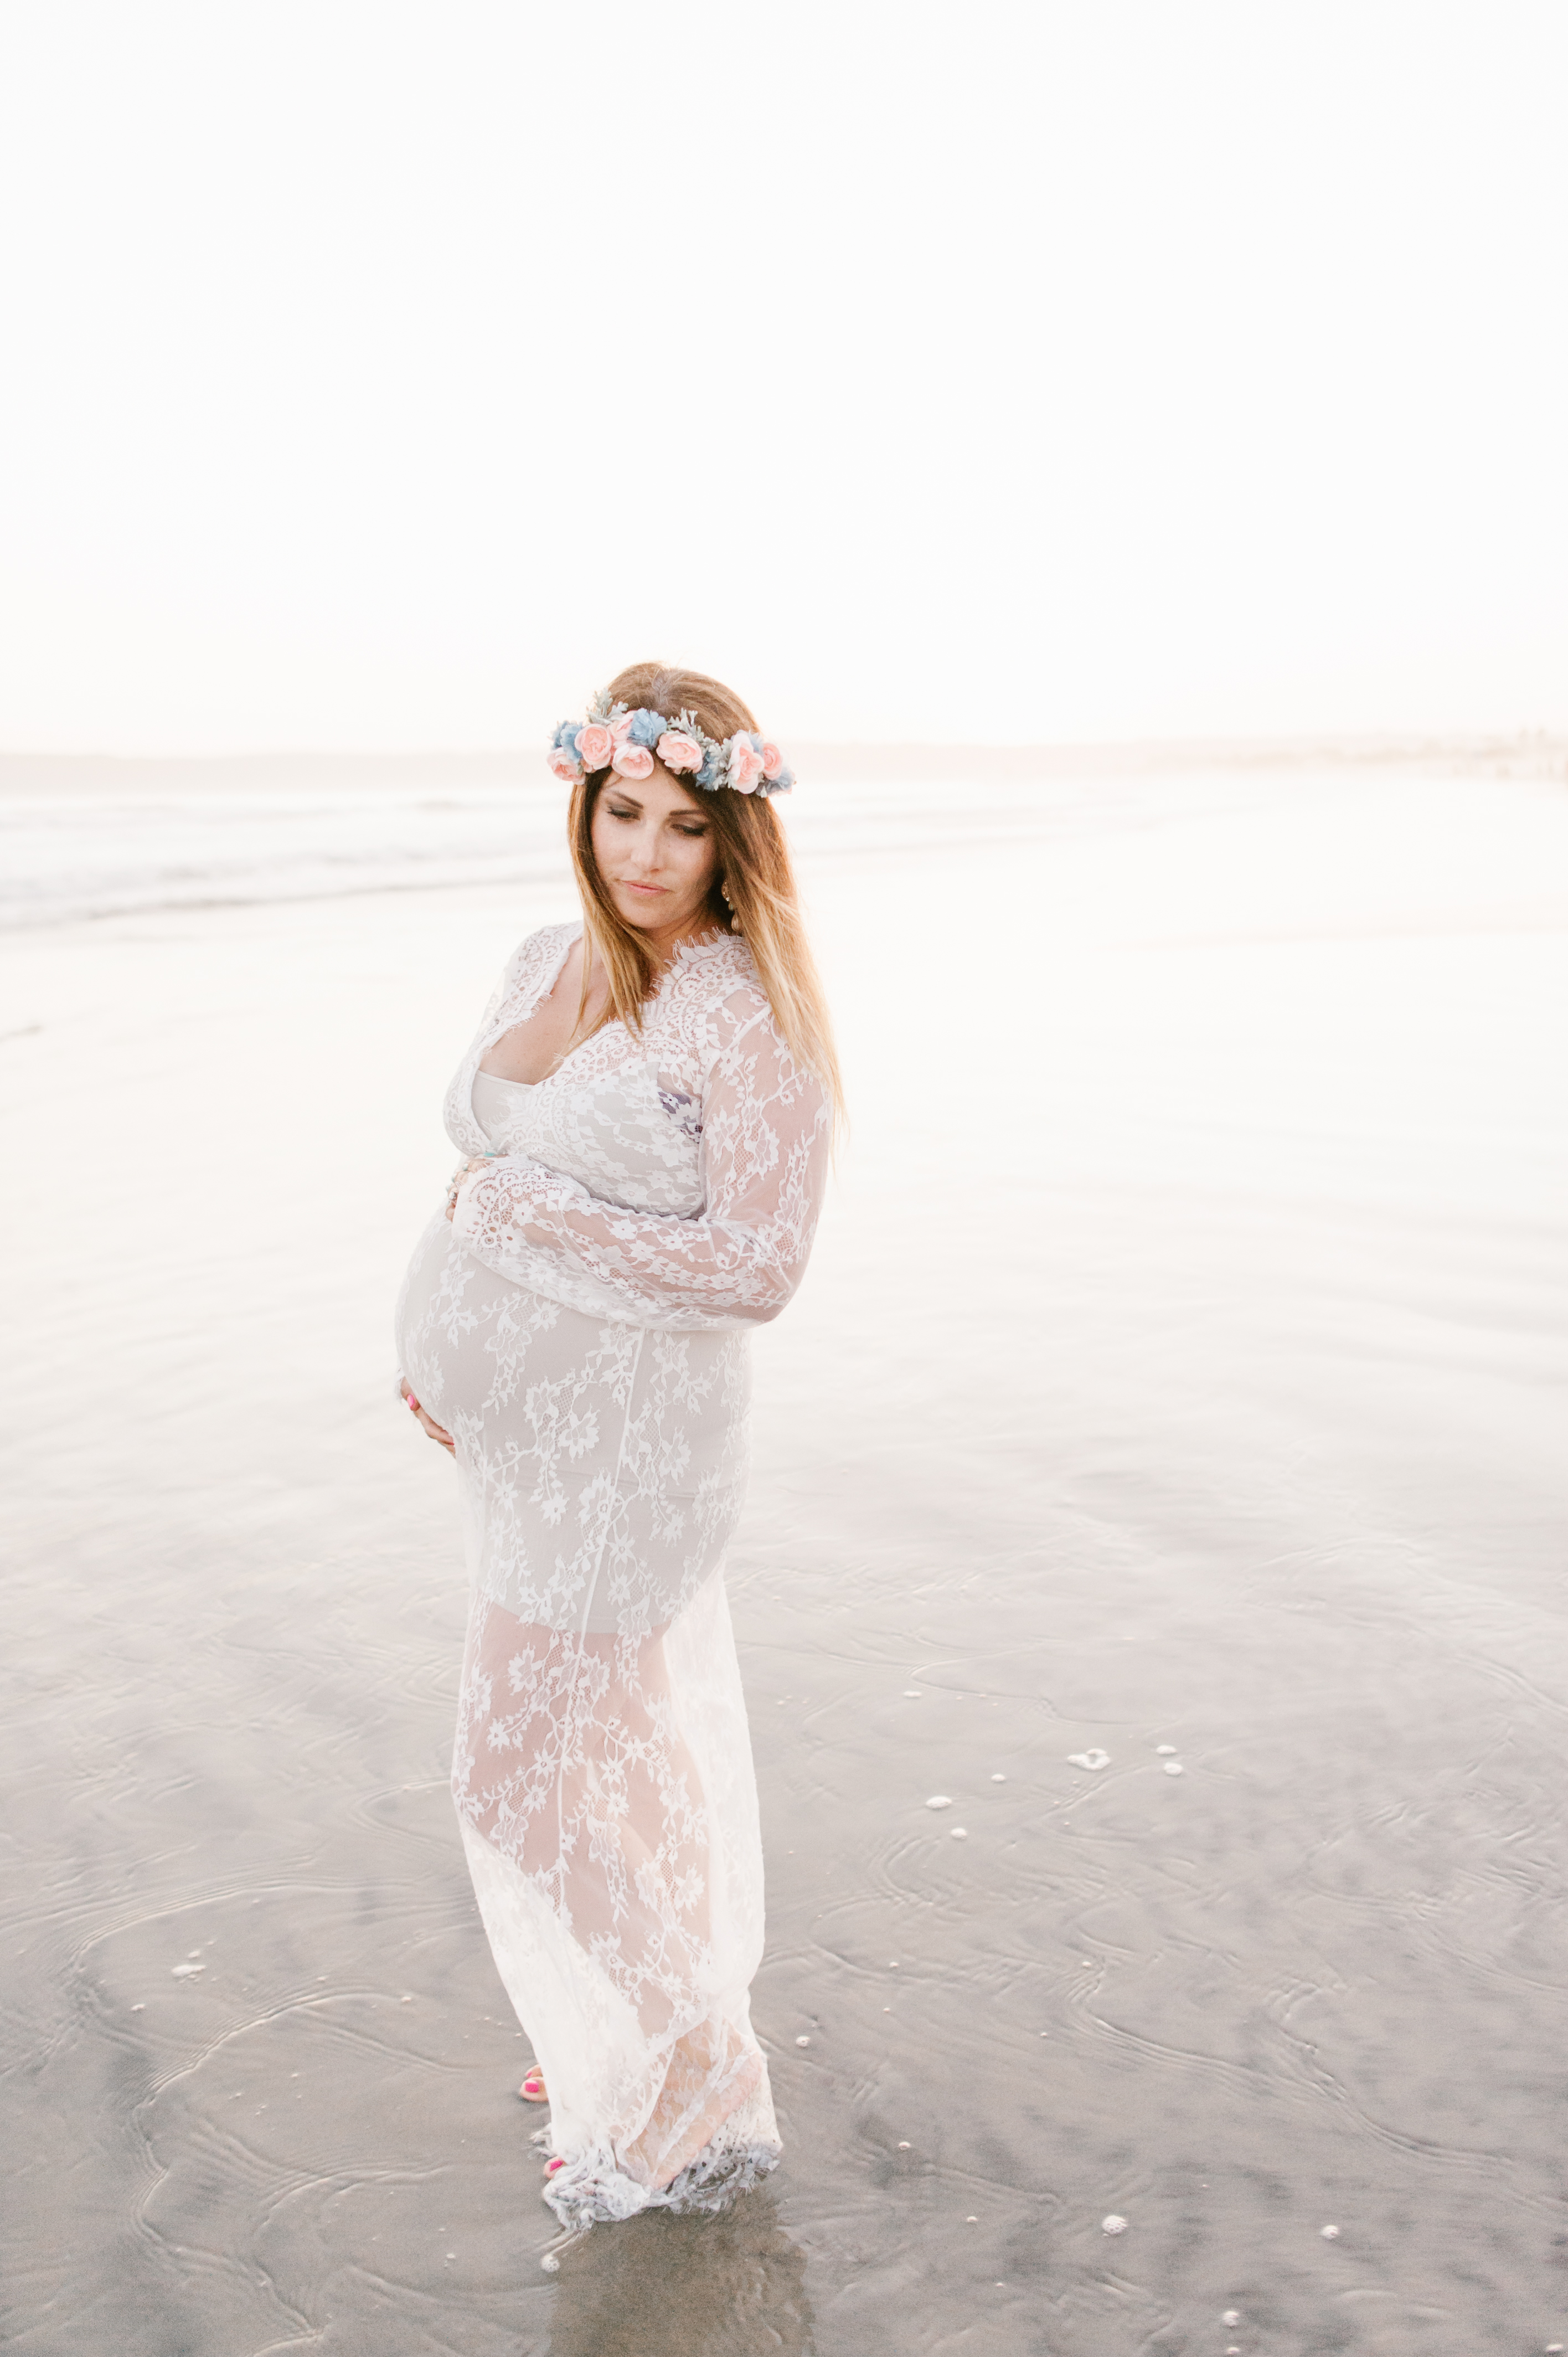 Boho maternityfamily session at Coronado Beach by Kylie Rae Photography